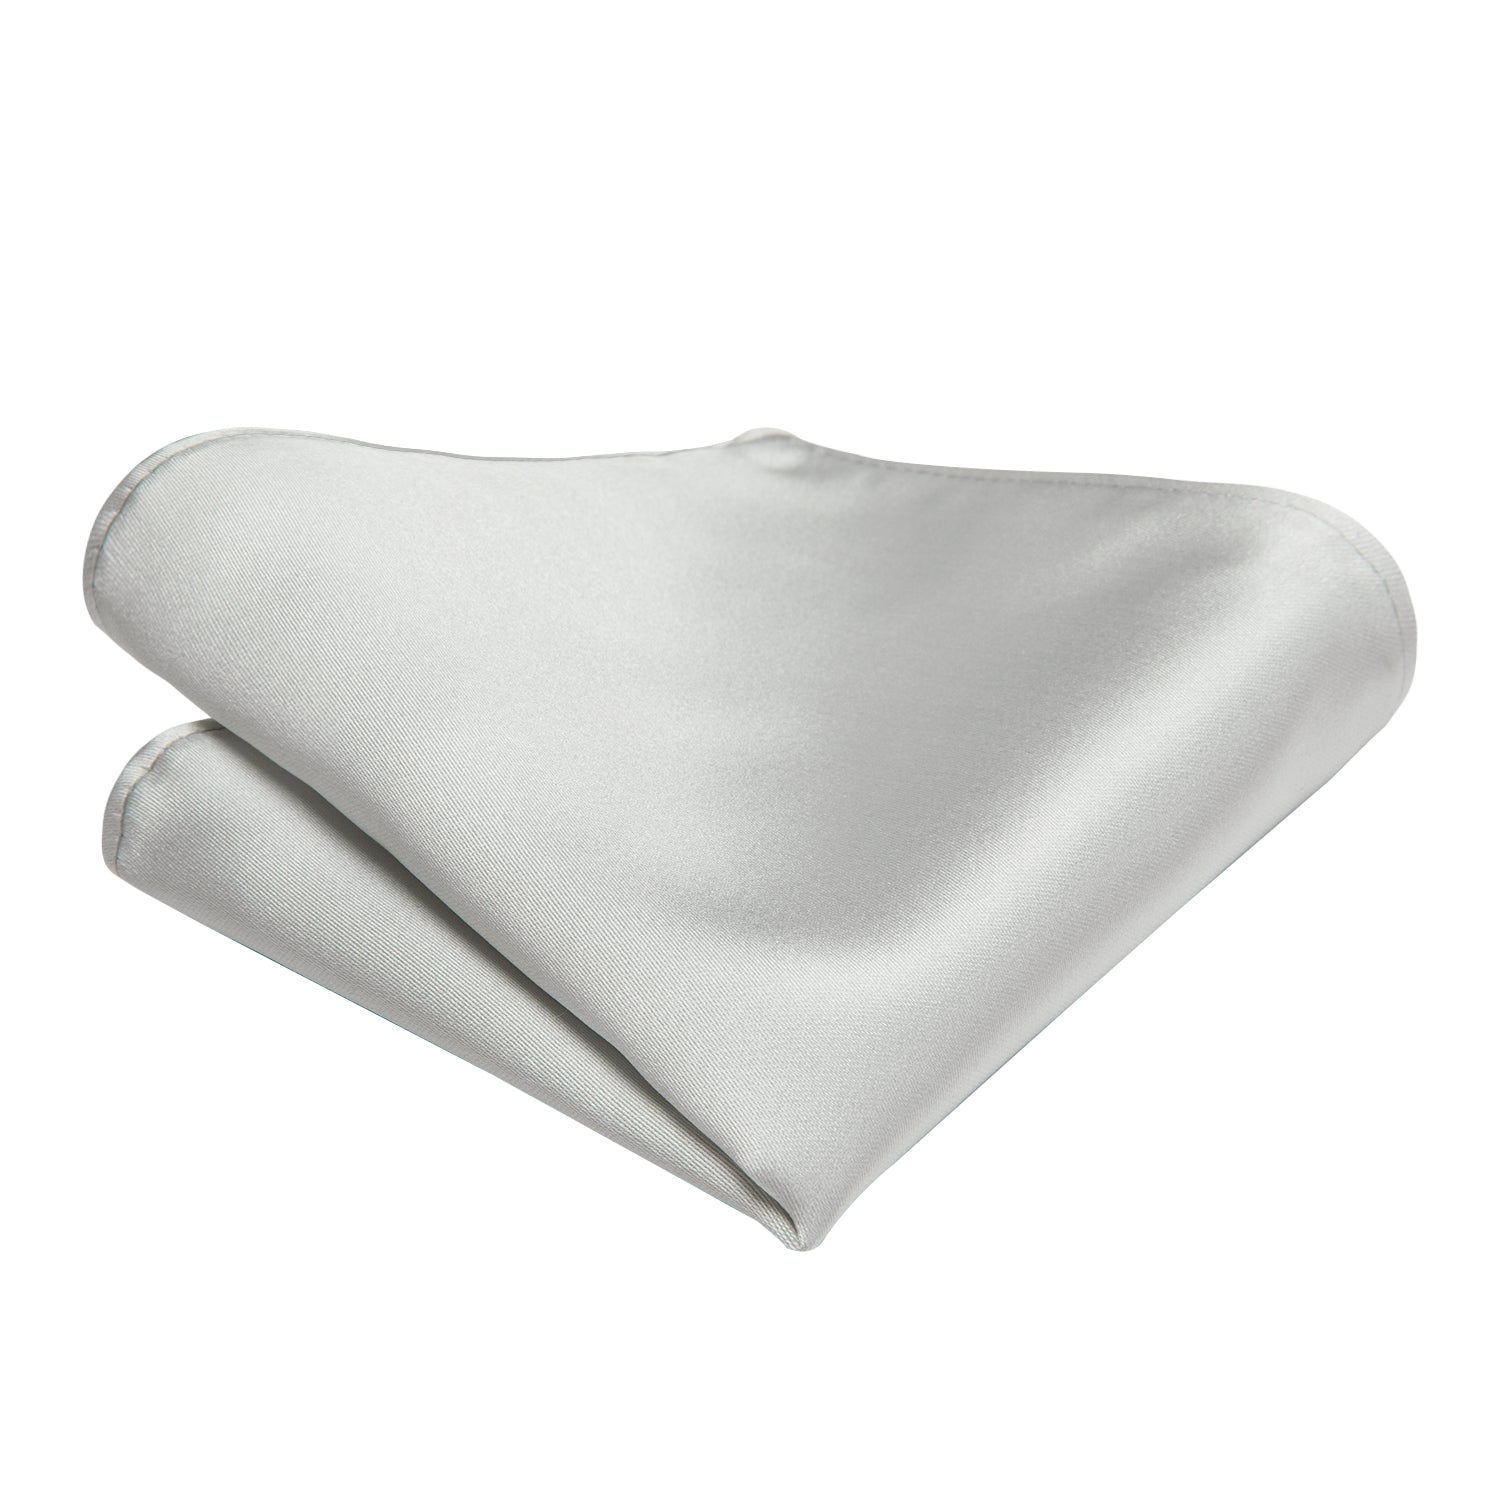 Pure White Solid Tie Pocket Square Cufflinks Set